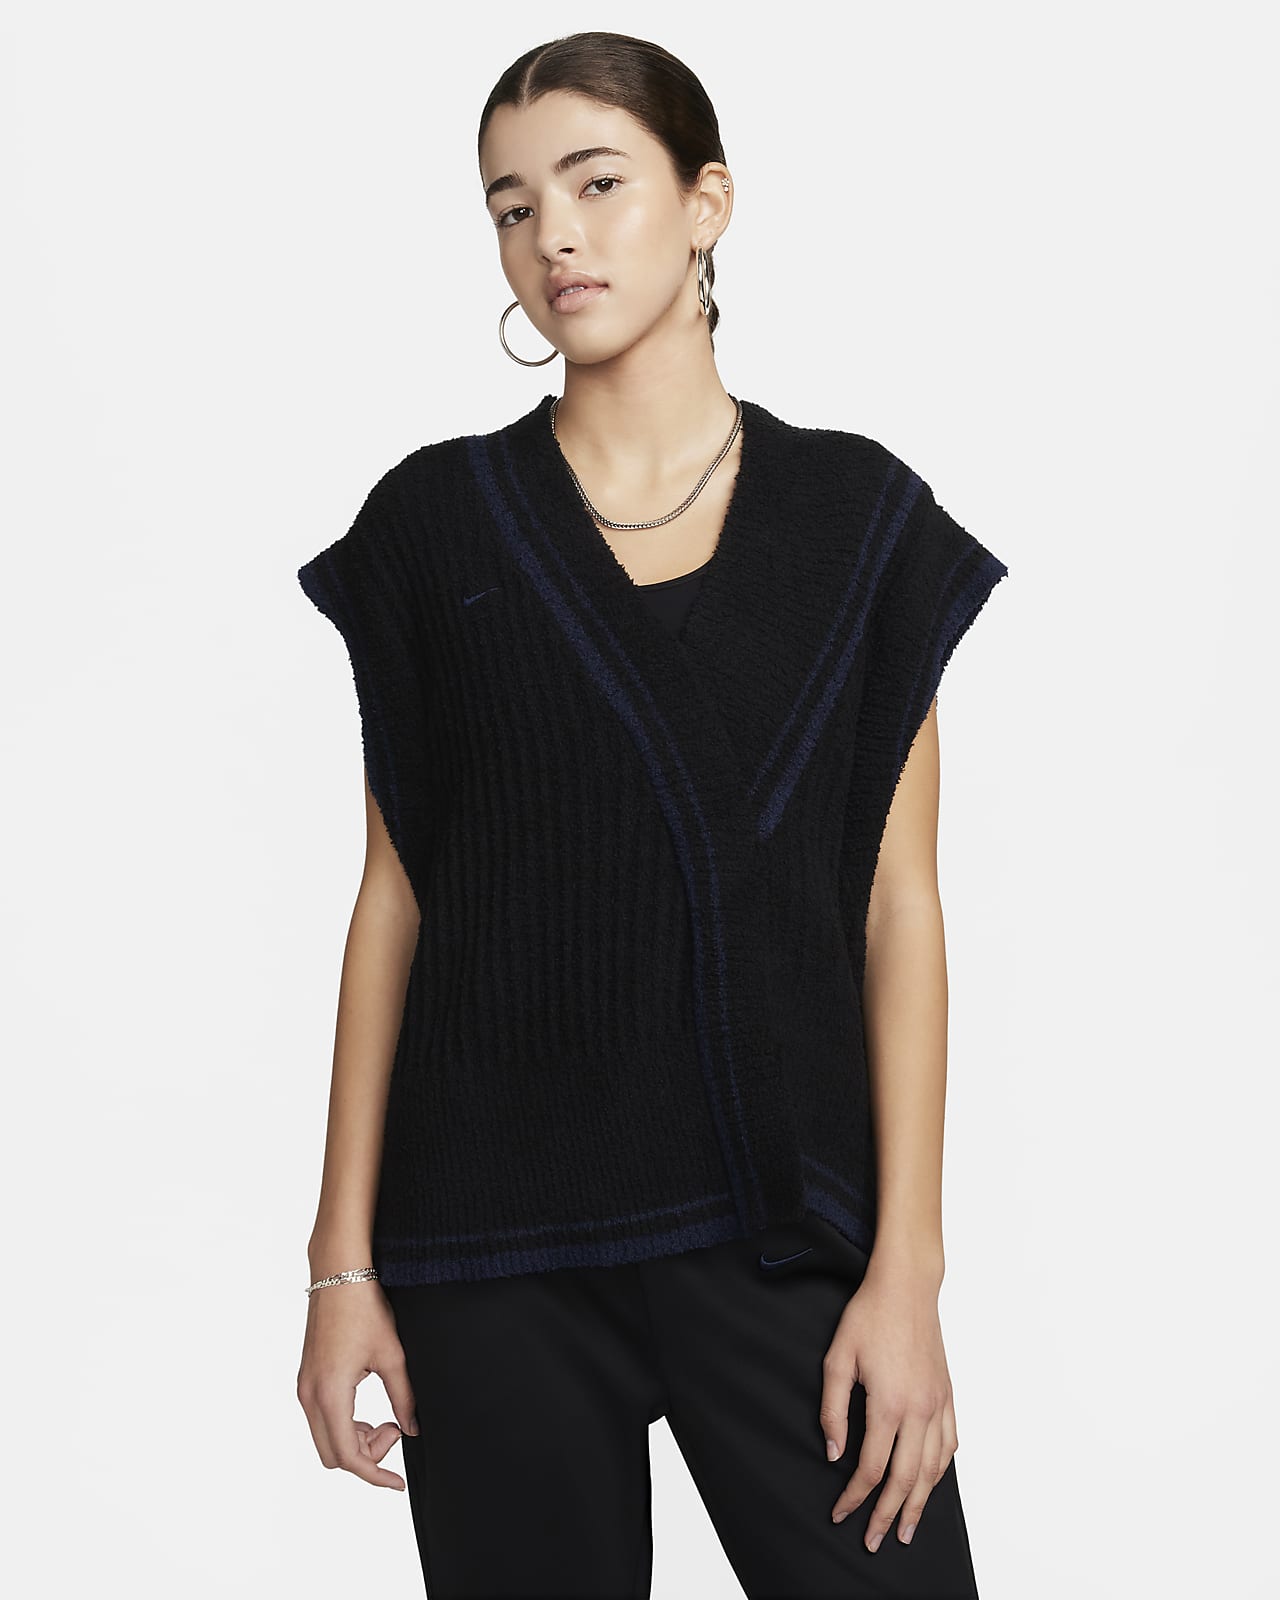 Chaleco de tejido Knit para mujer Nike Sportswear Collection